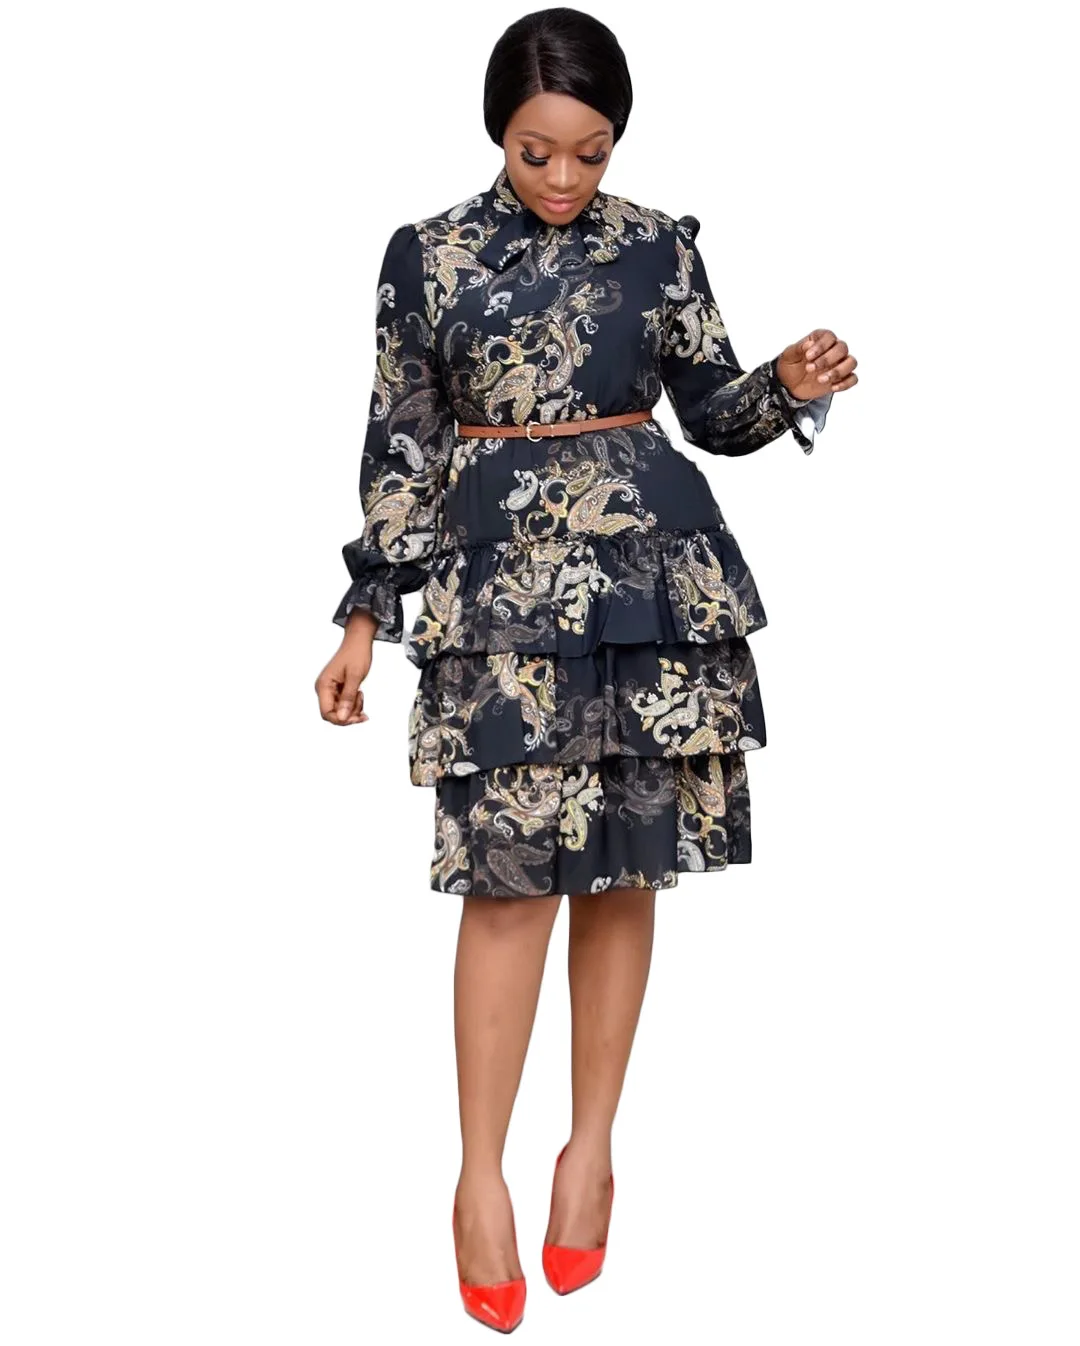 Robes Africaines Pour Femmes Vêtements Africains Robe Africaine Imprimer Dashiki Vêtements Ankara Plus Taille Afrique Femme Robe S-3XL